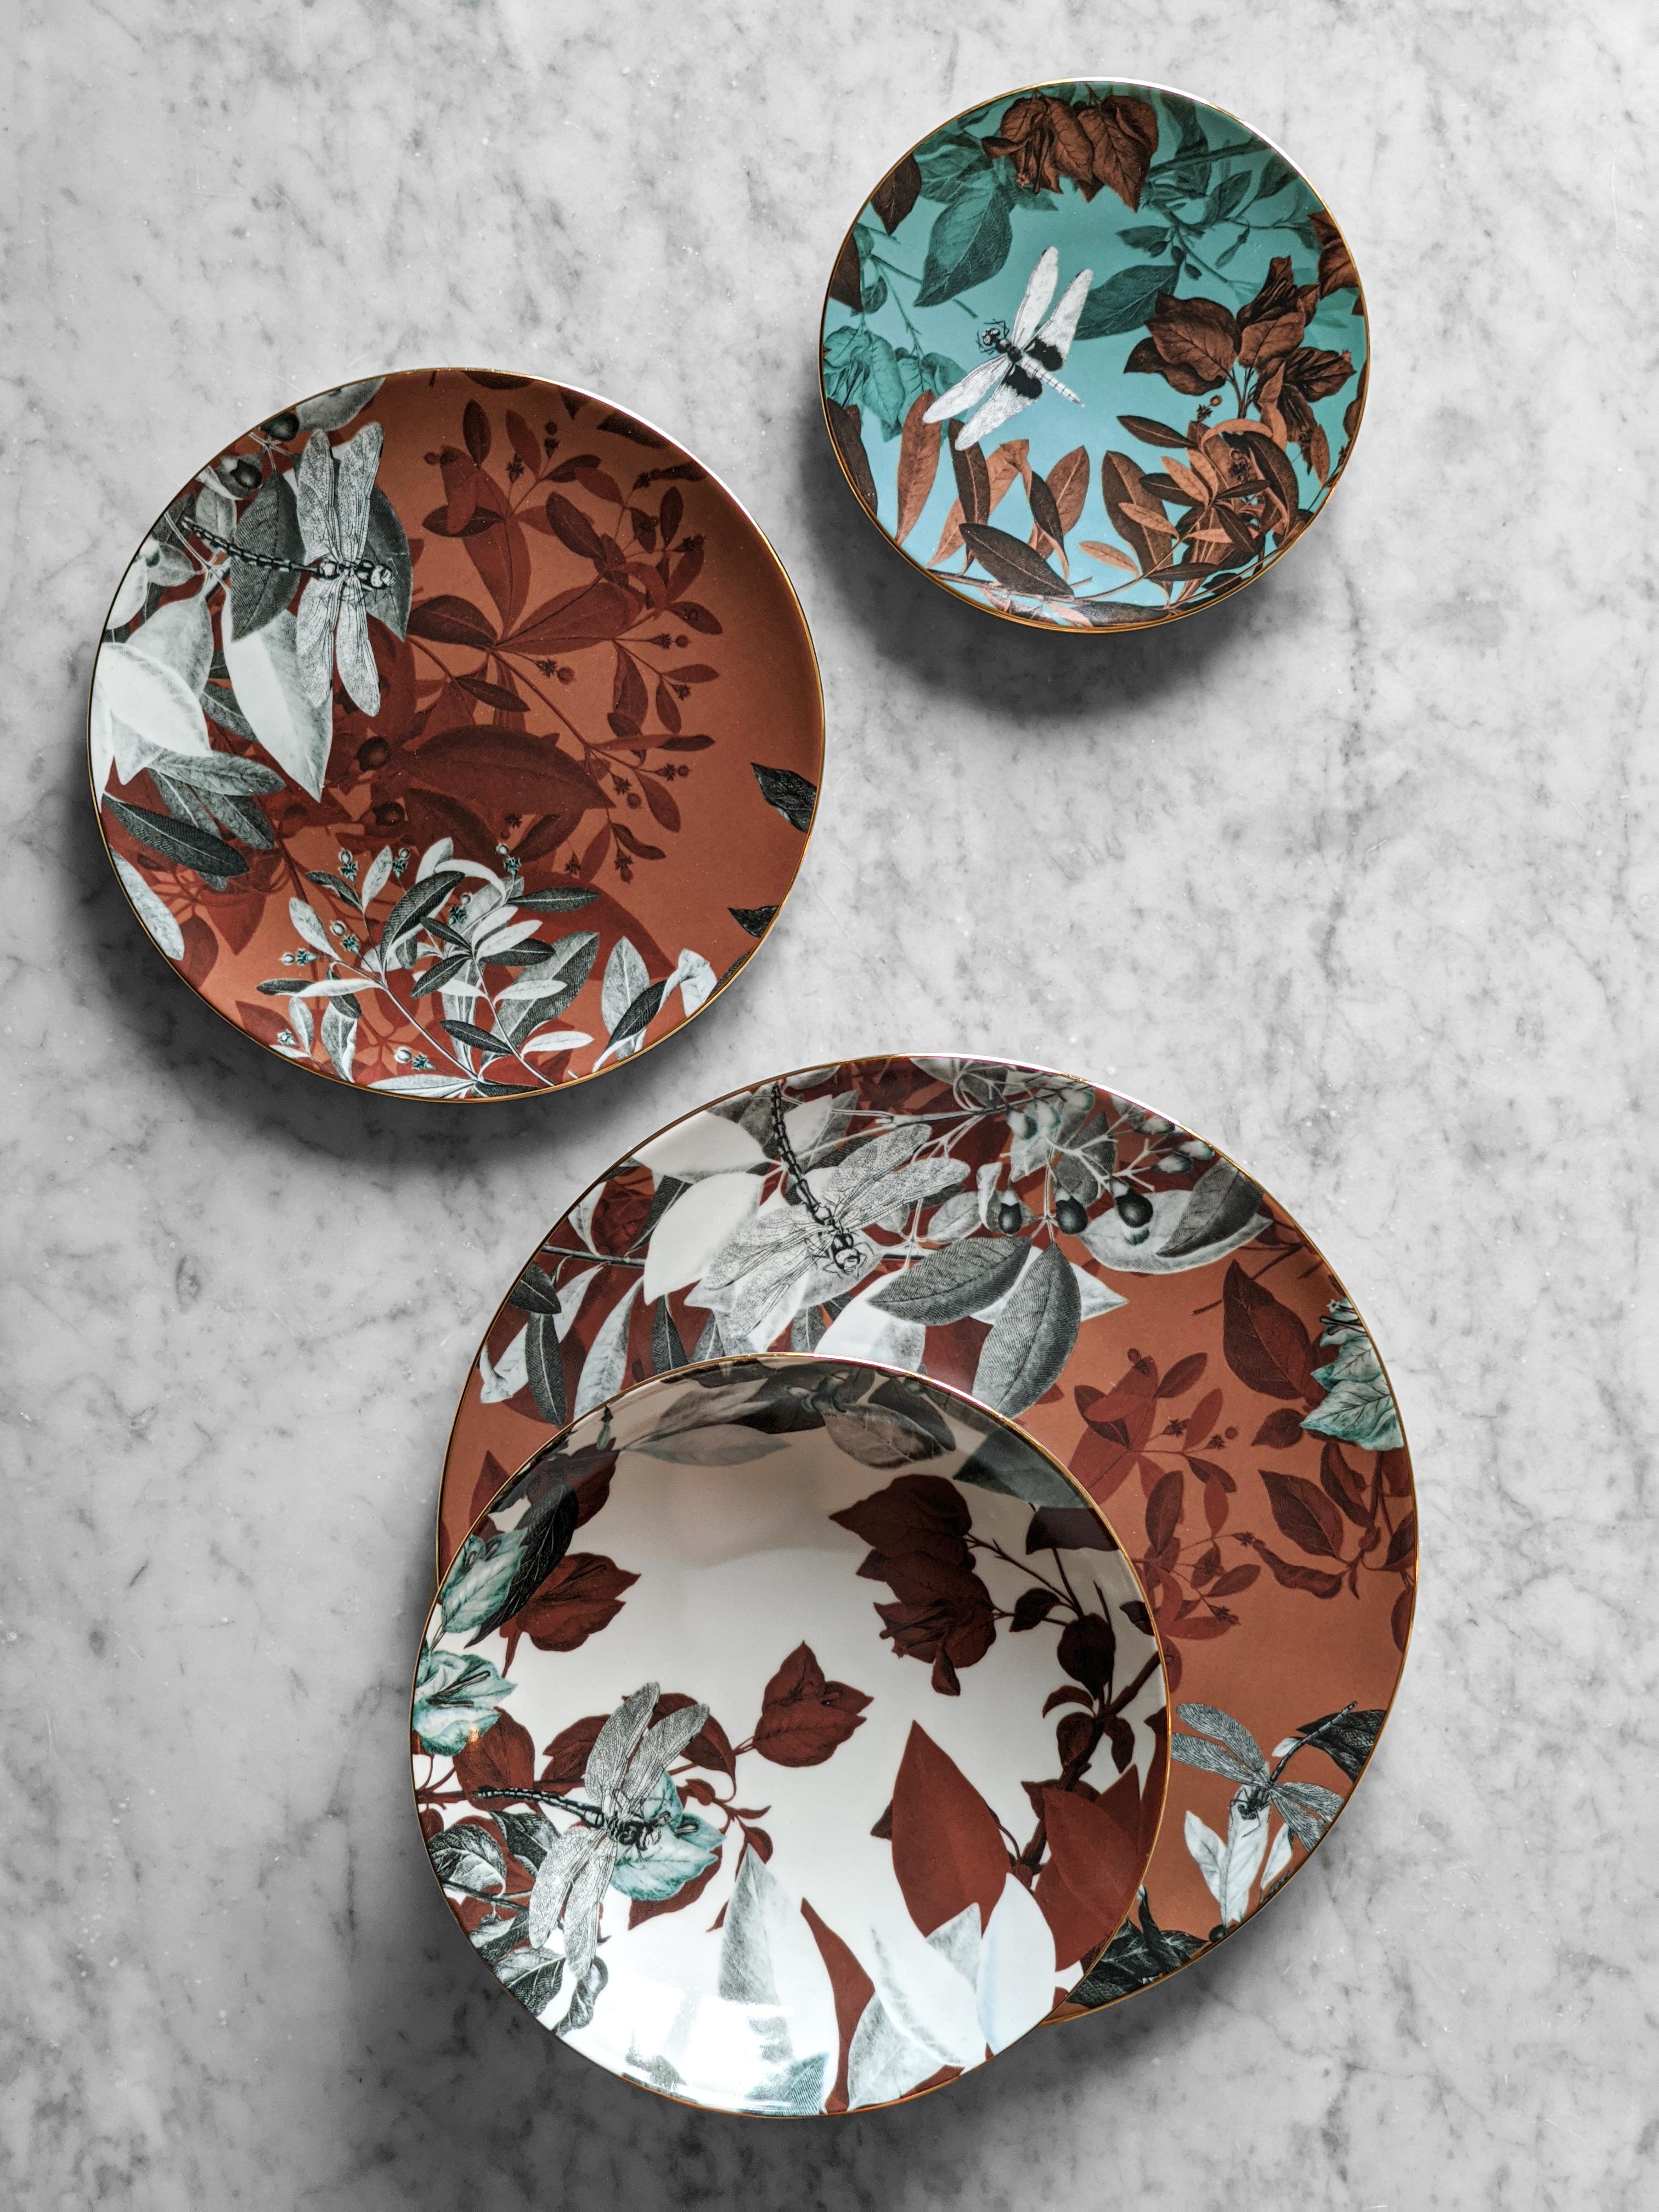 Black Dragon, Six Contemporary Porcelain Dessert Plates with Decorative Design For Sale 6